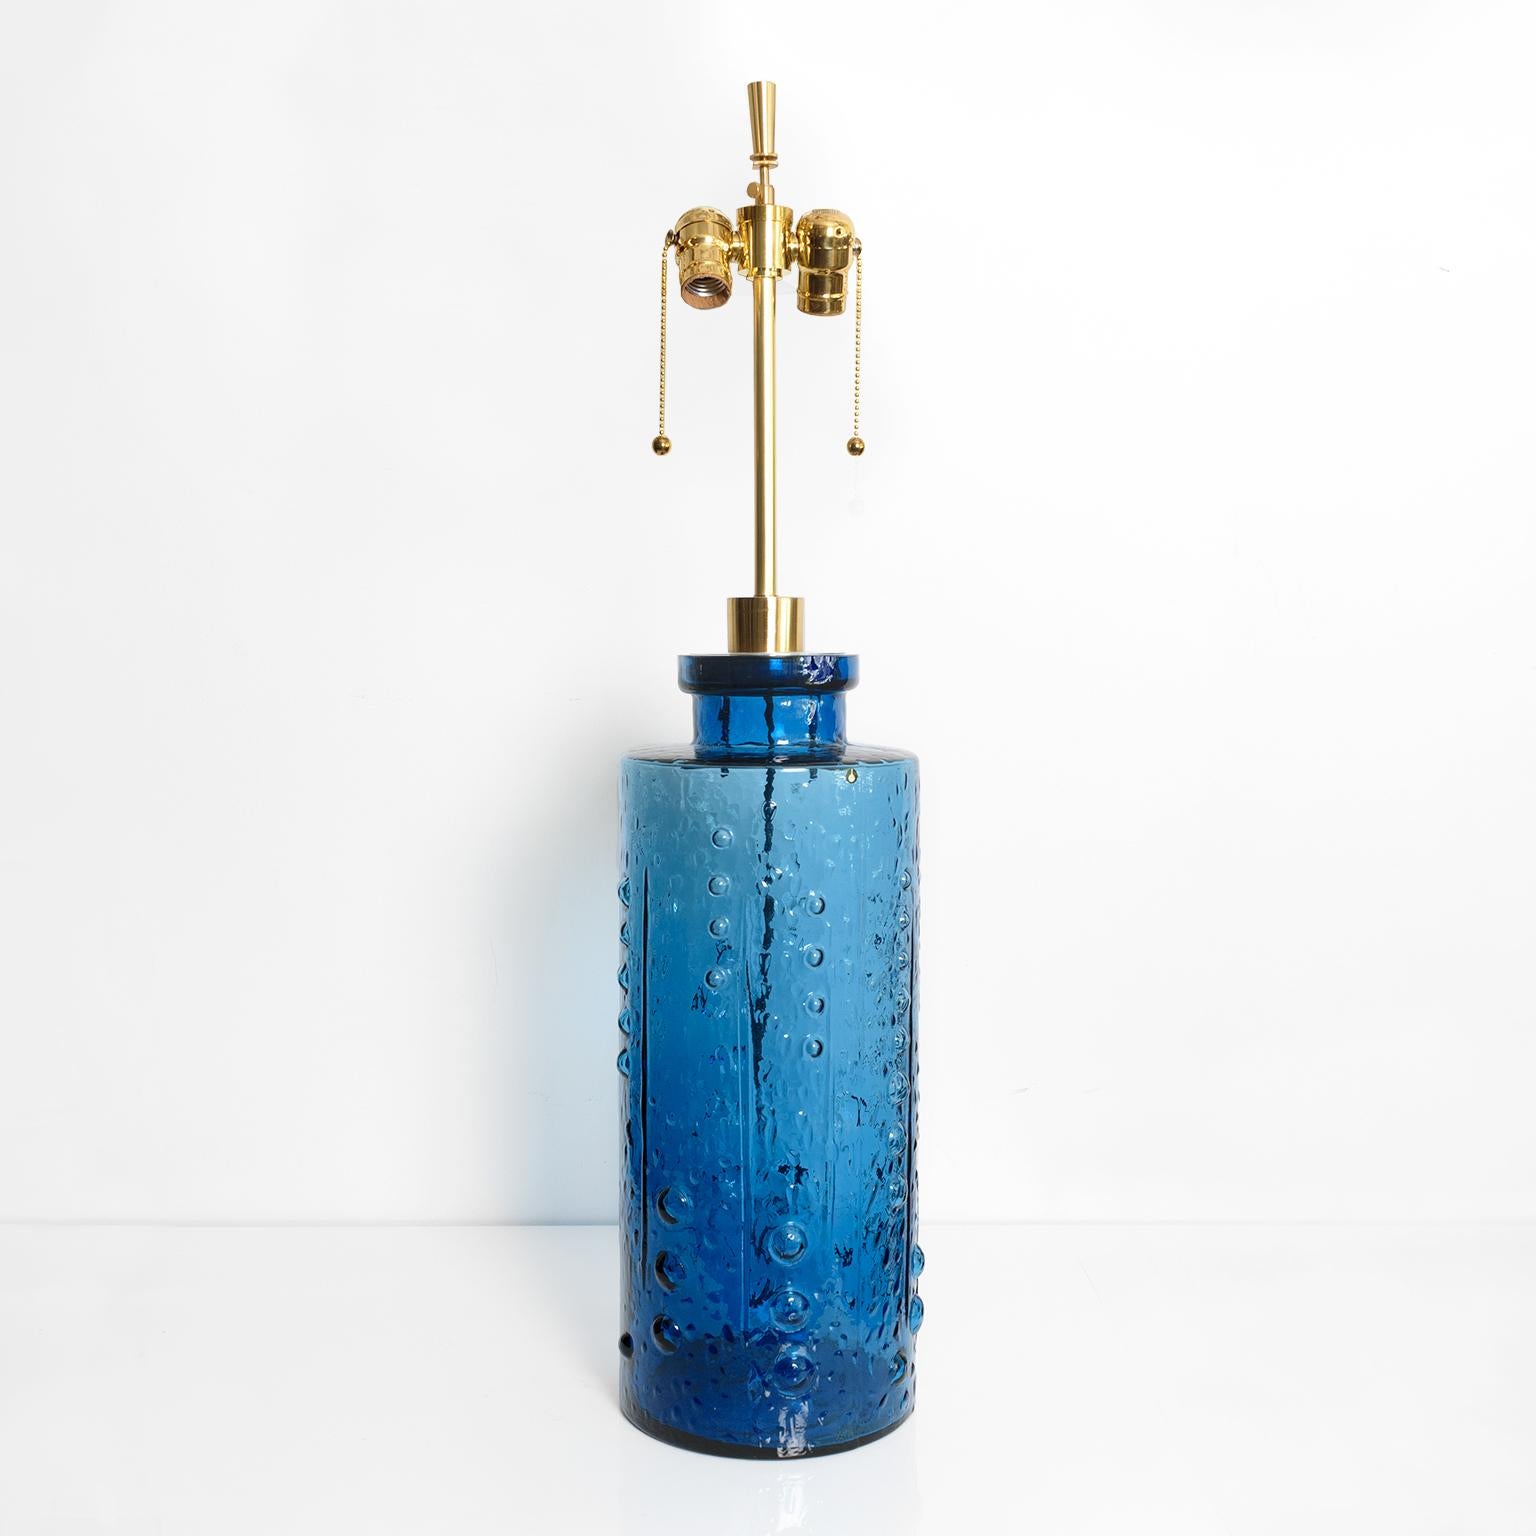 Hand-Crafted Scandinavian Modern Deep Blue Glass Lamp by Pukeberg Glasbruk, Sweden, 1960's For Sale